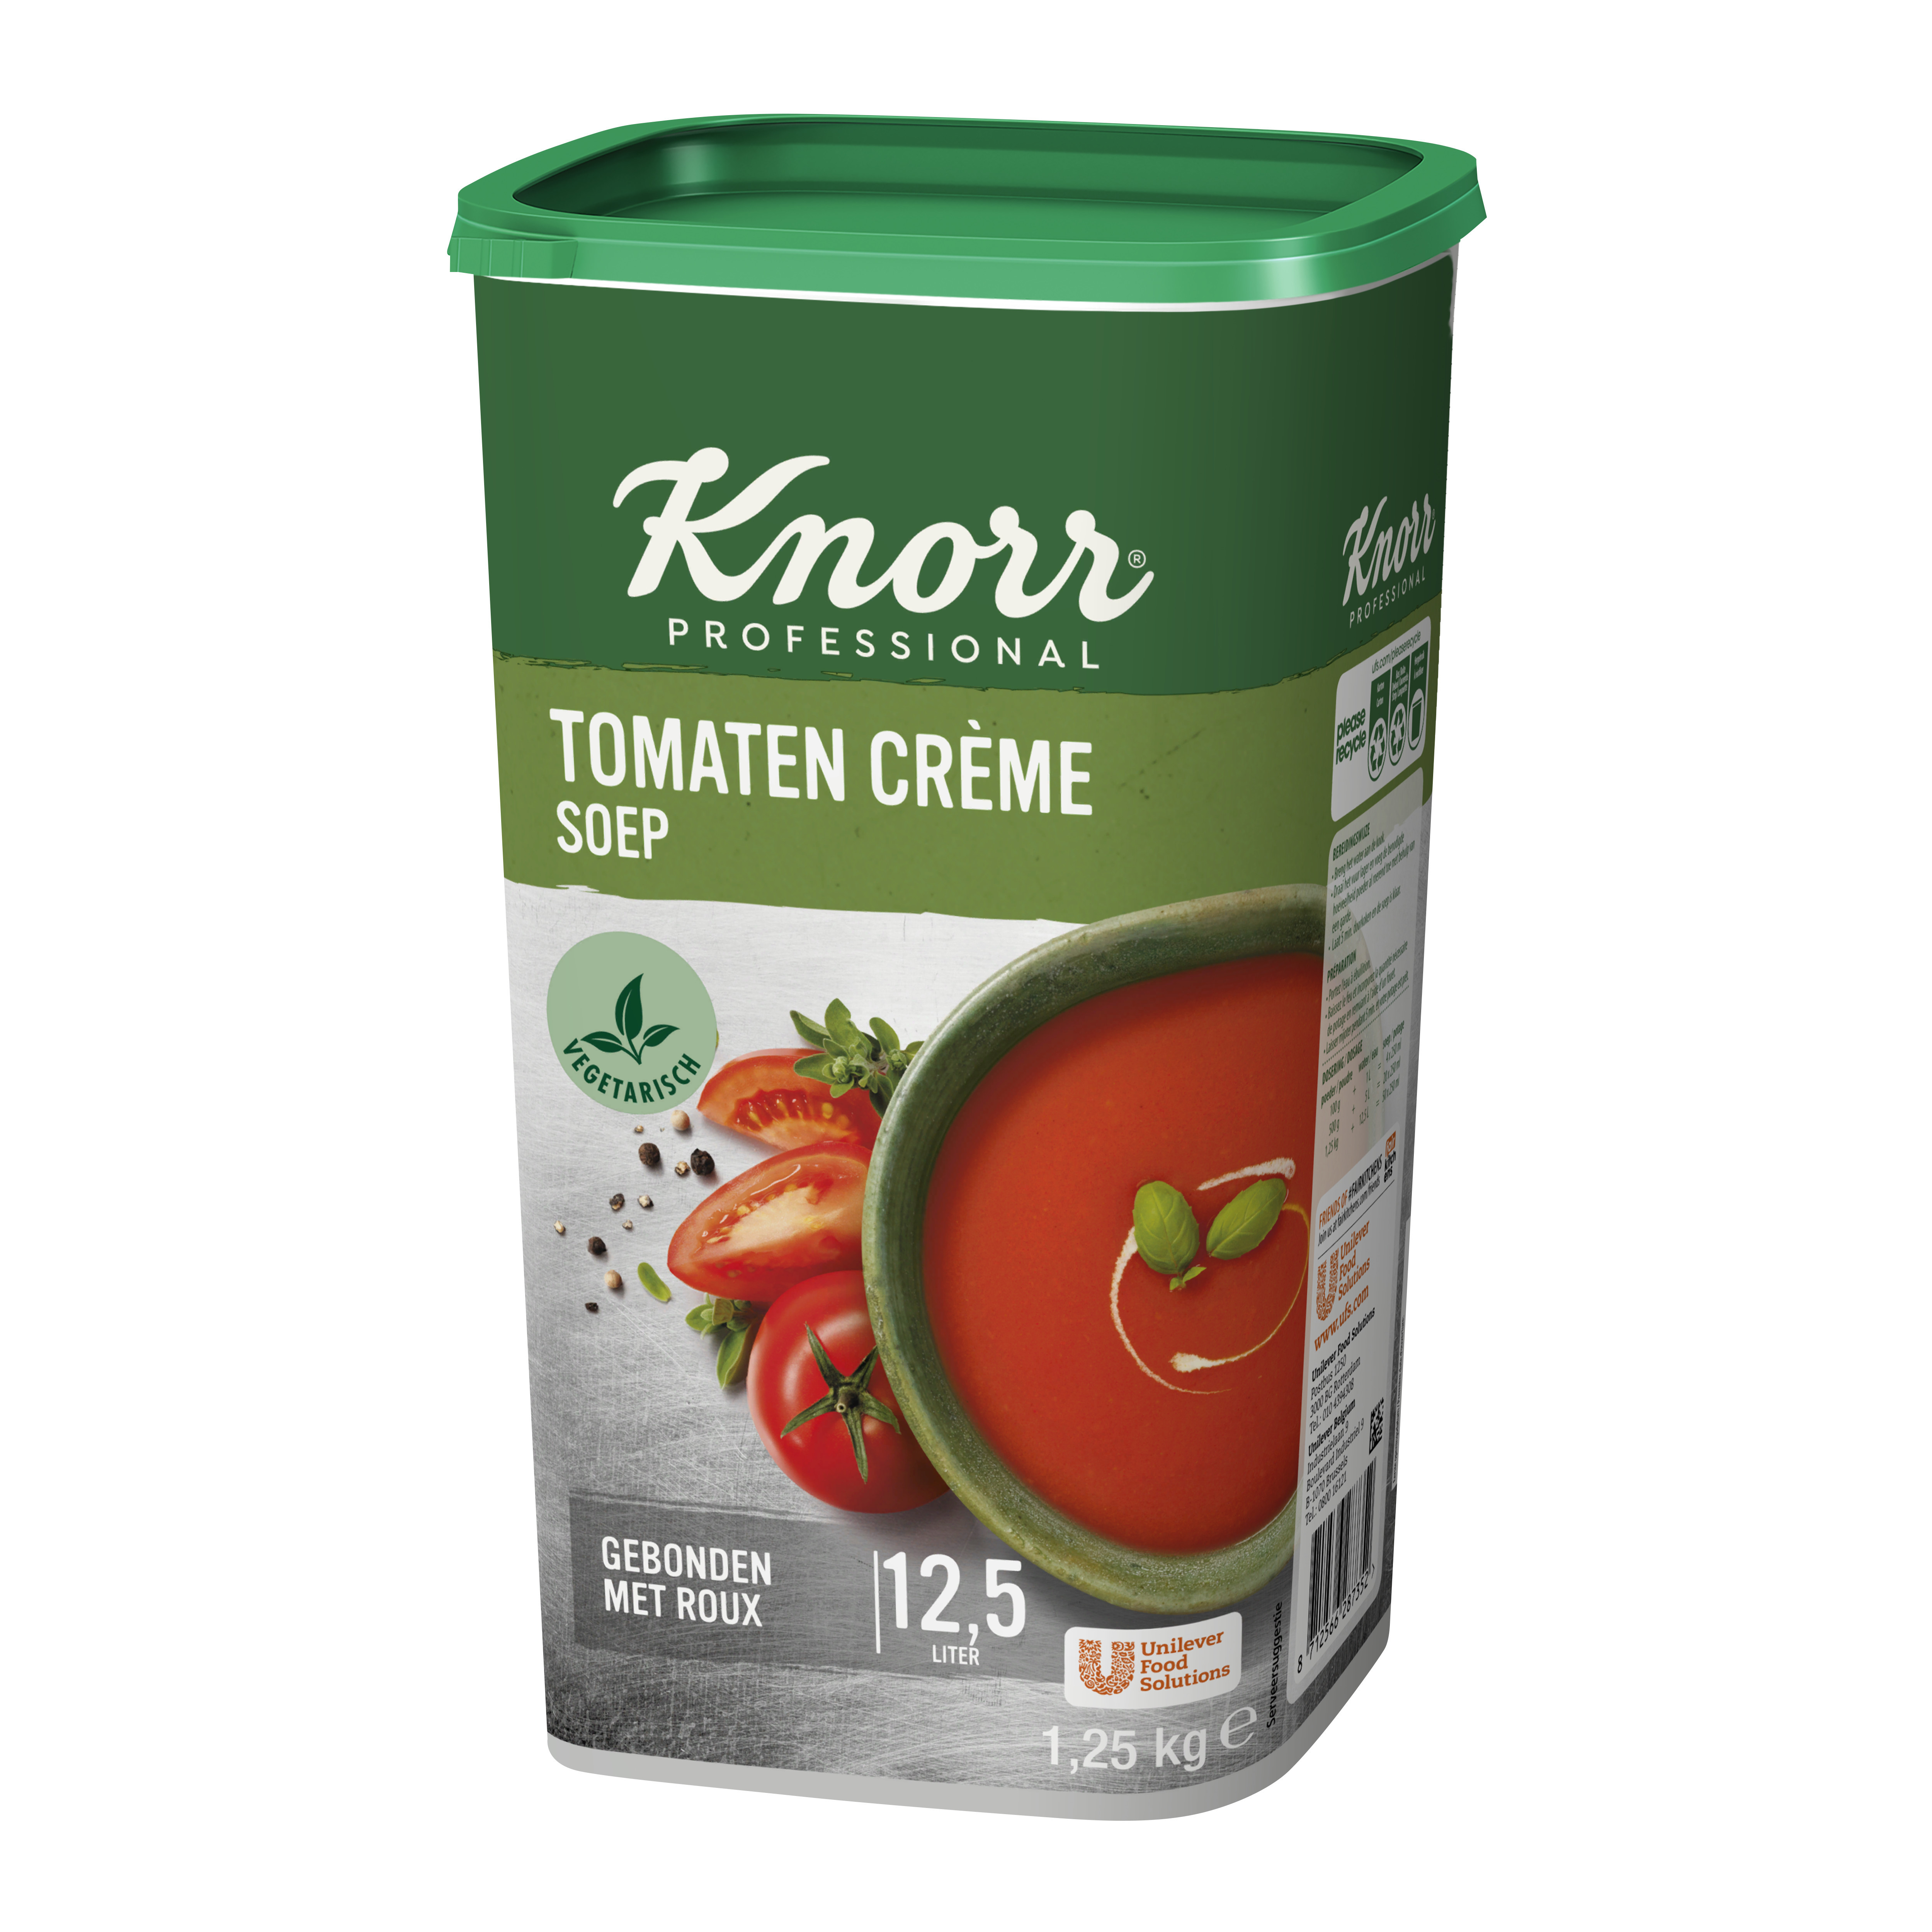 klink kleding zanger Knorr tomaten creme soep 1.25kg Professional Online Kopen - Nevejan